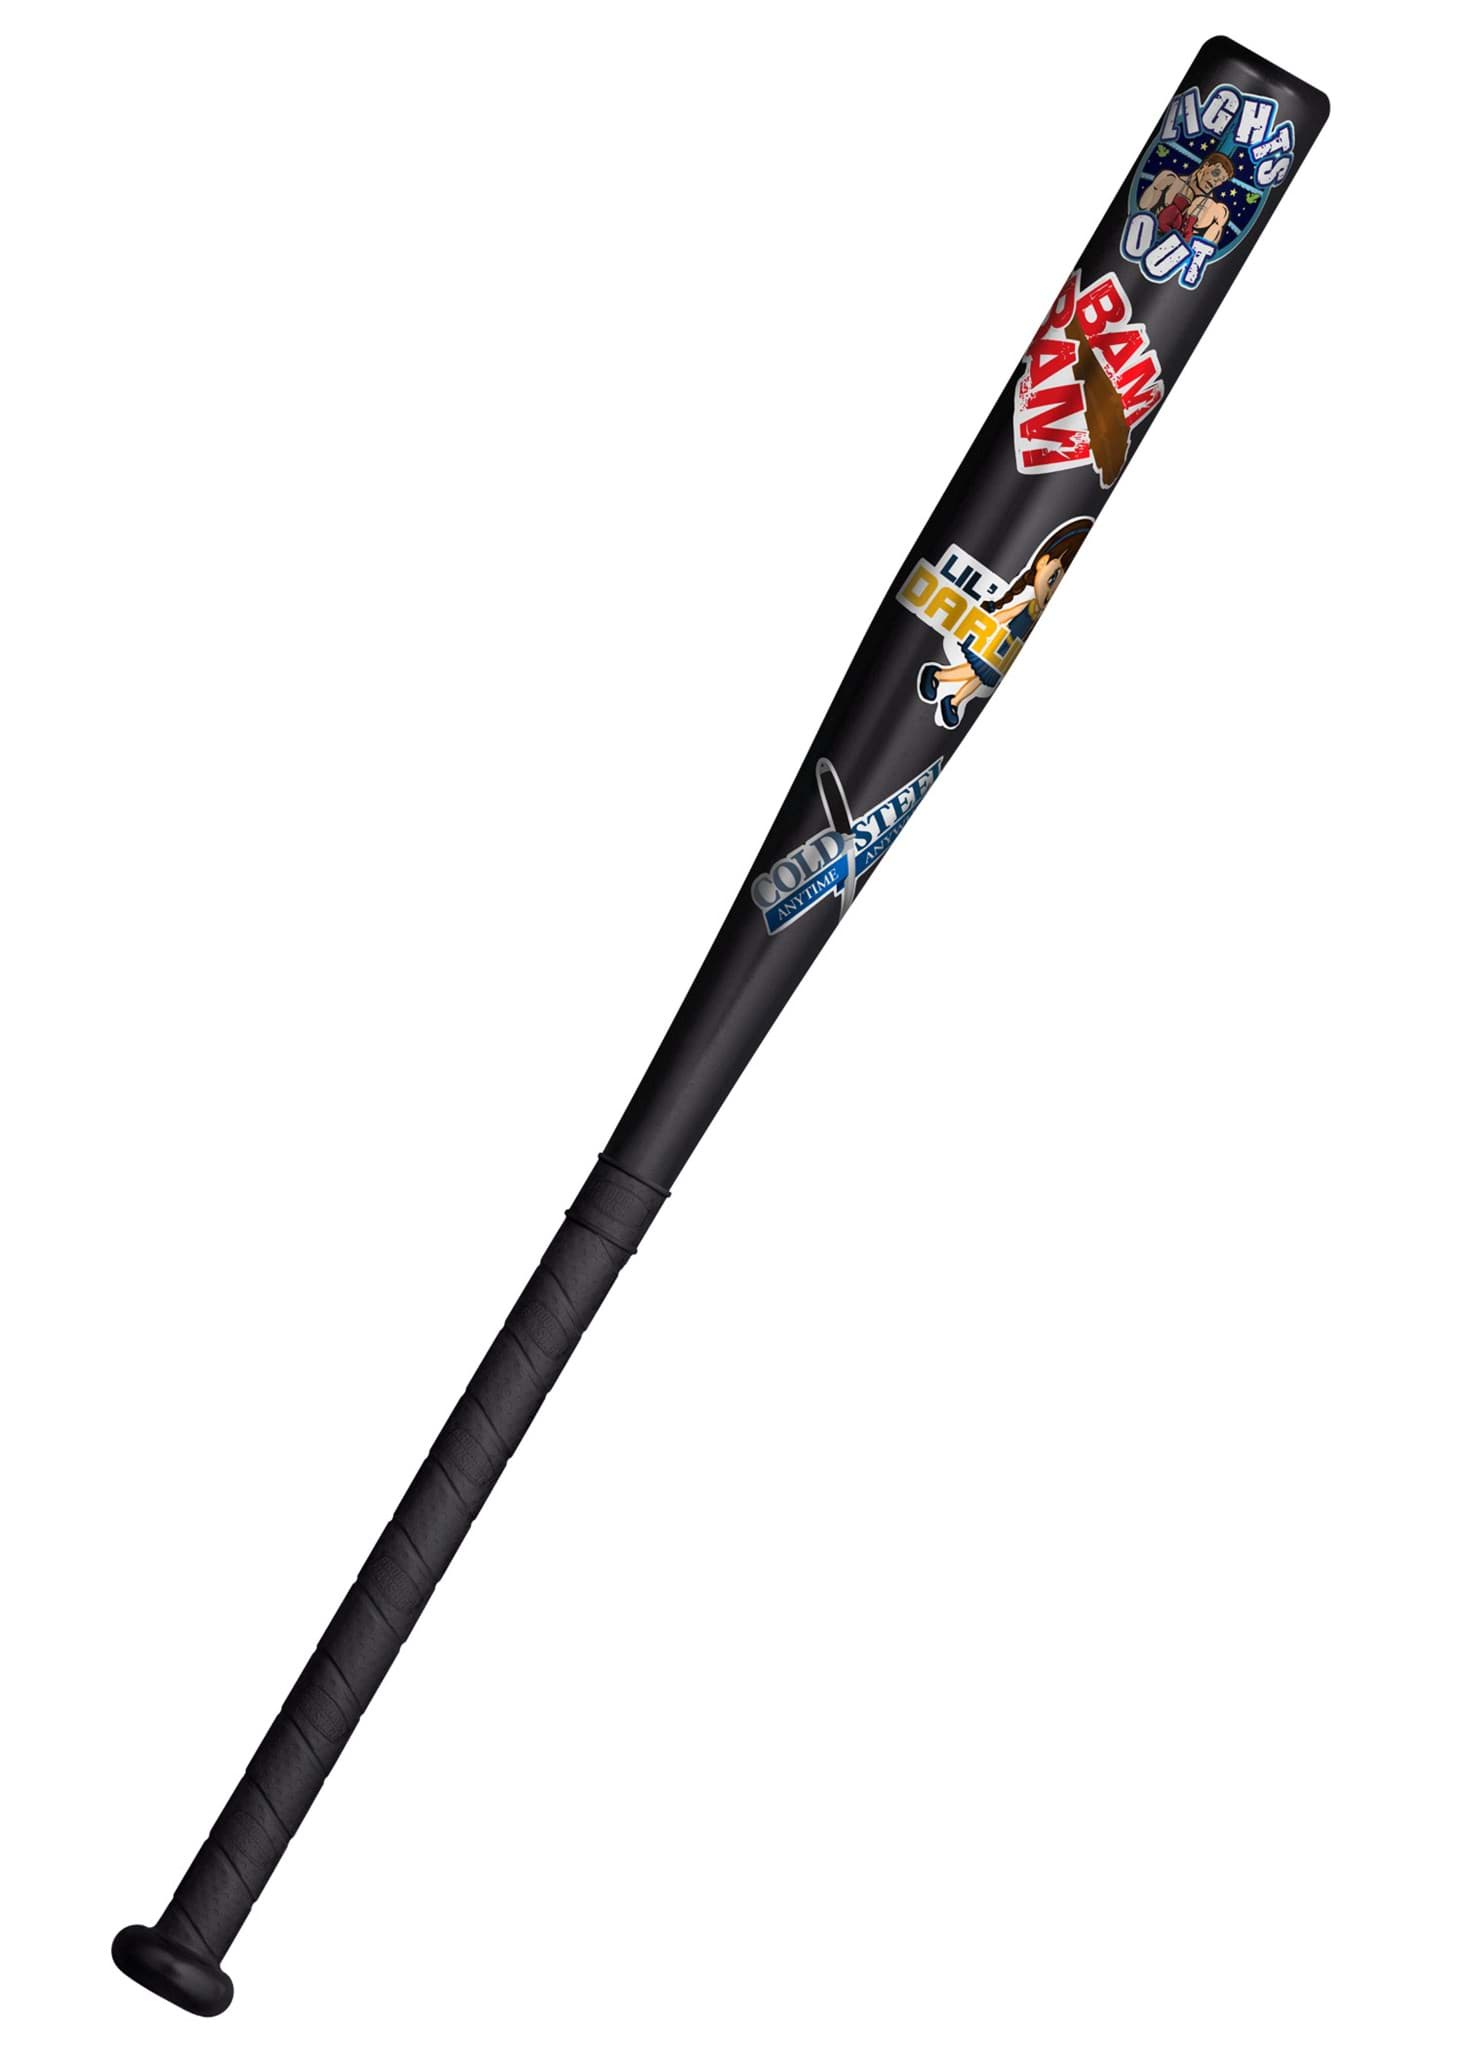 Picture of Cold Steel - Brooklyn Banshee Baseball Bat